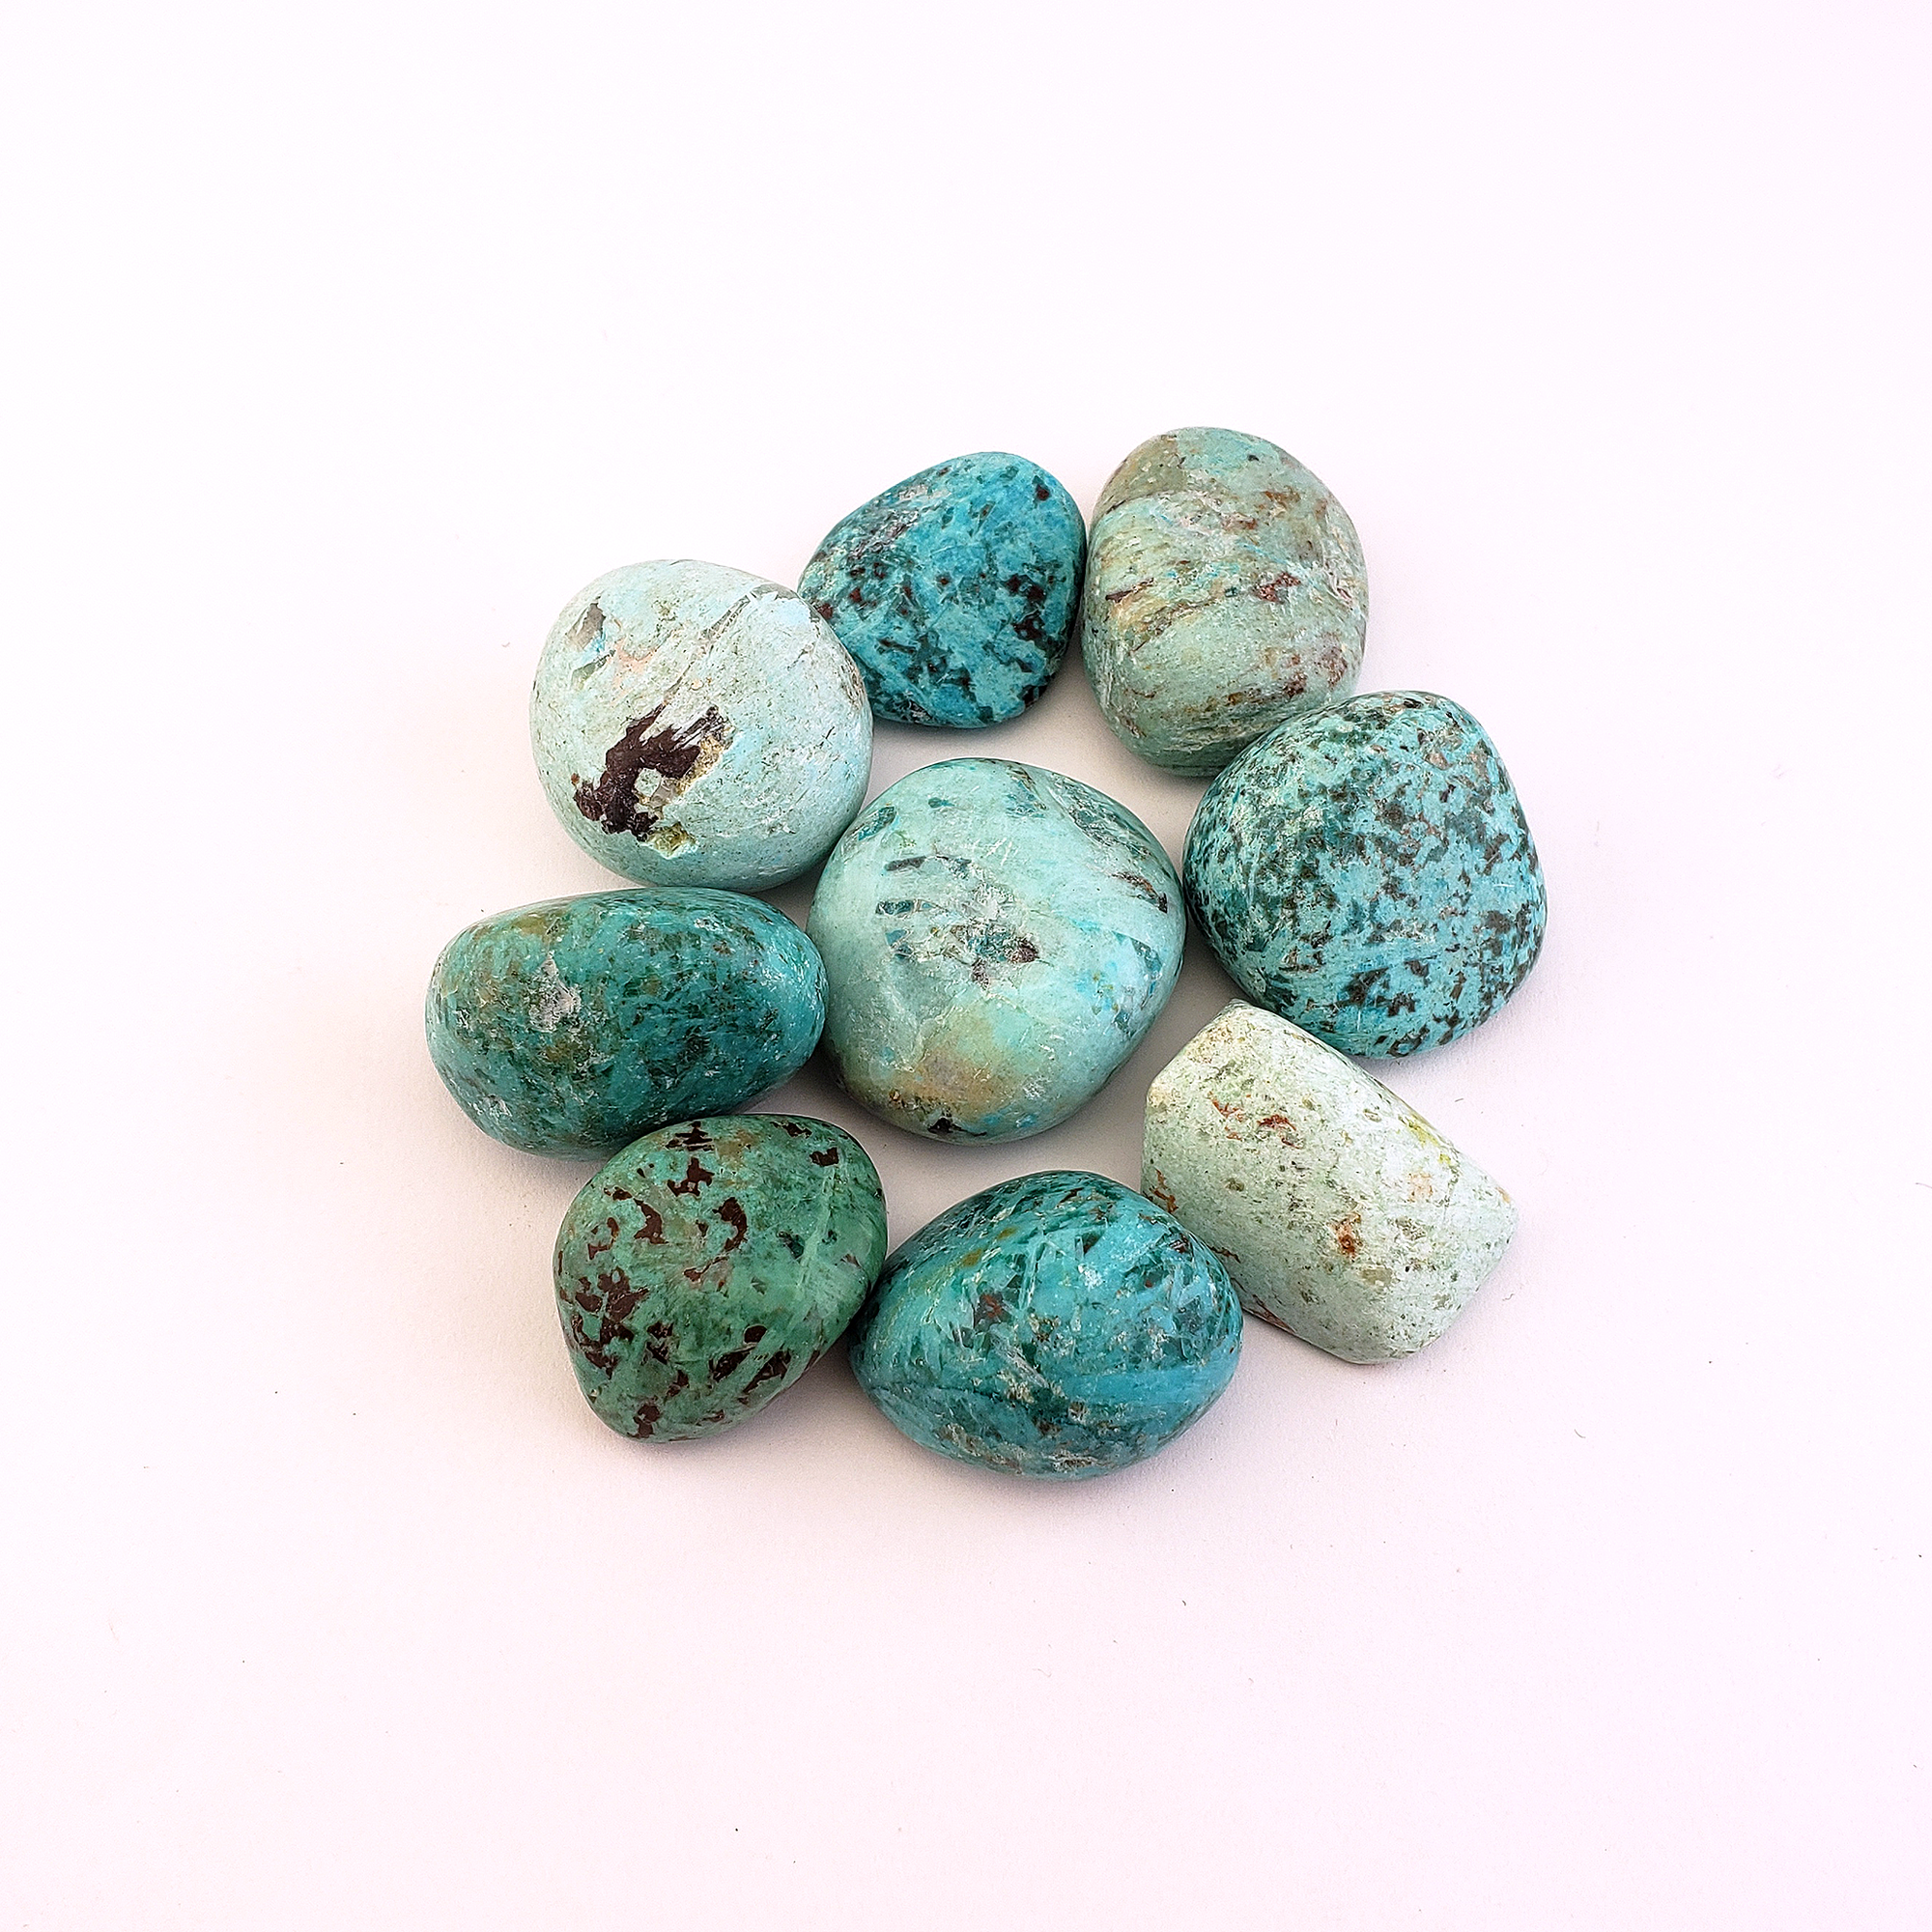 Peruvian Turquoise Natural Tumbled Stone - One Stone - White Background 2